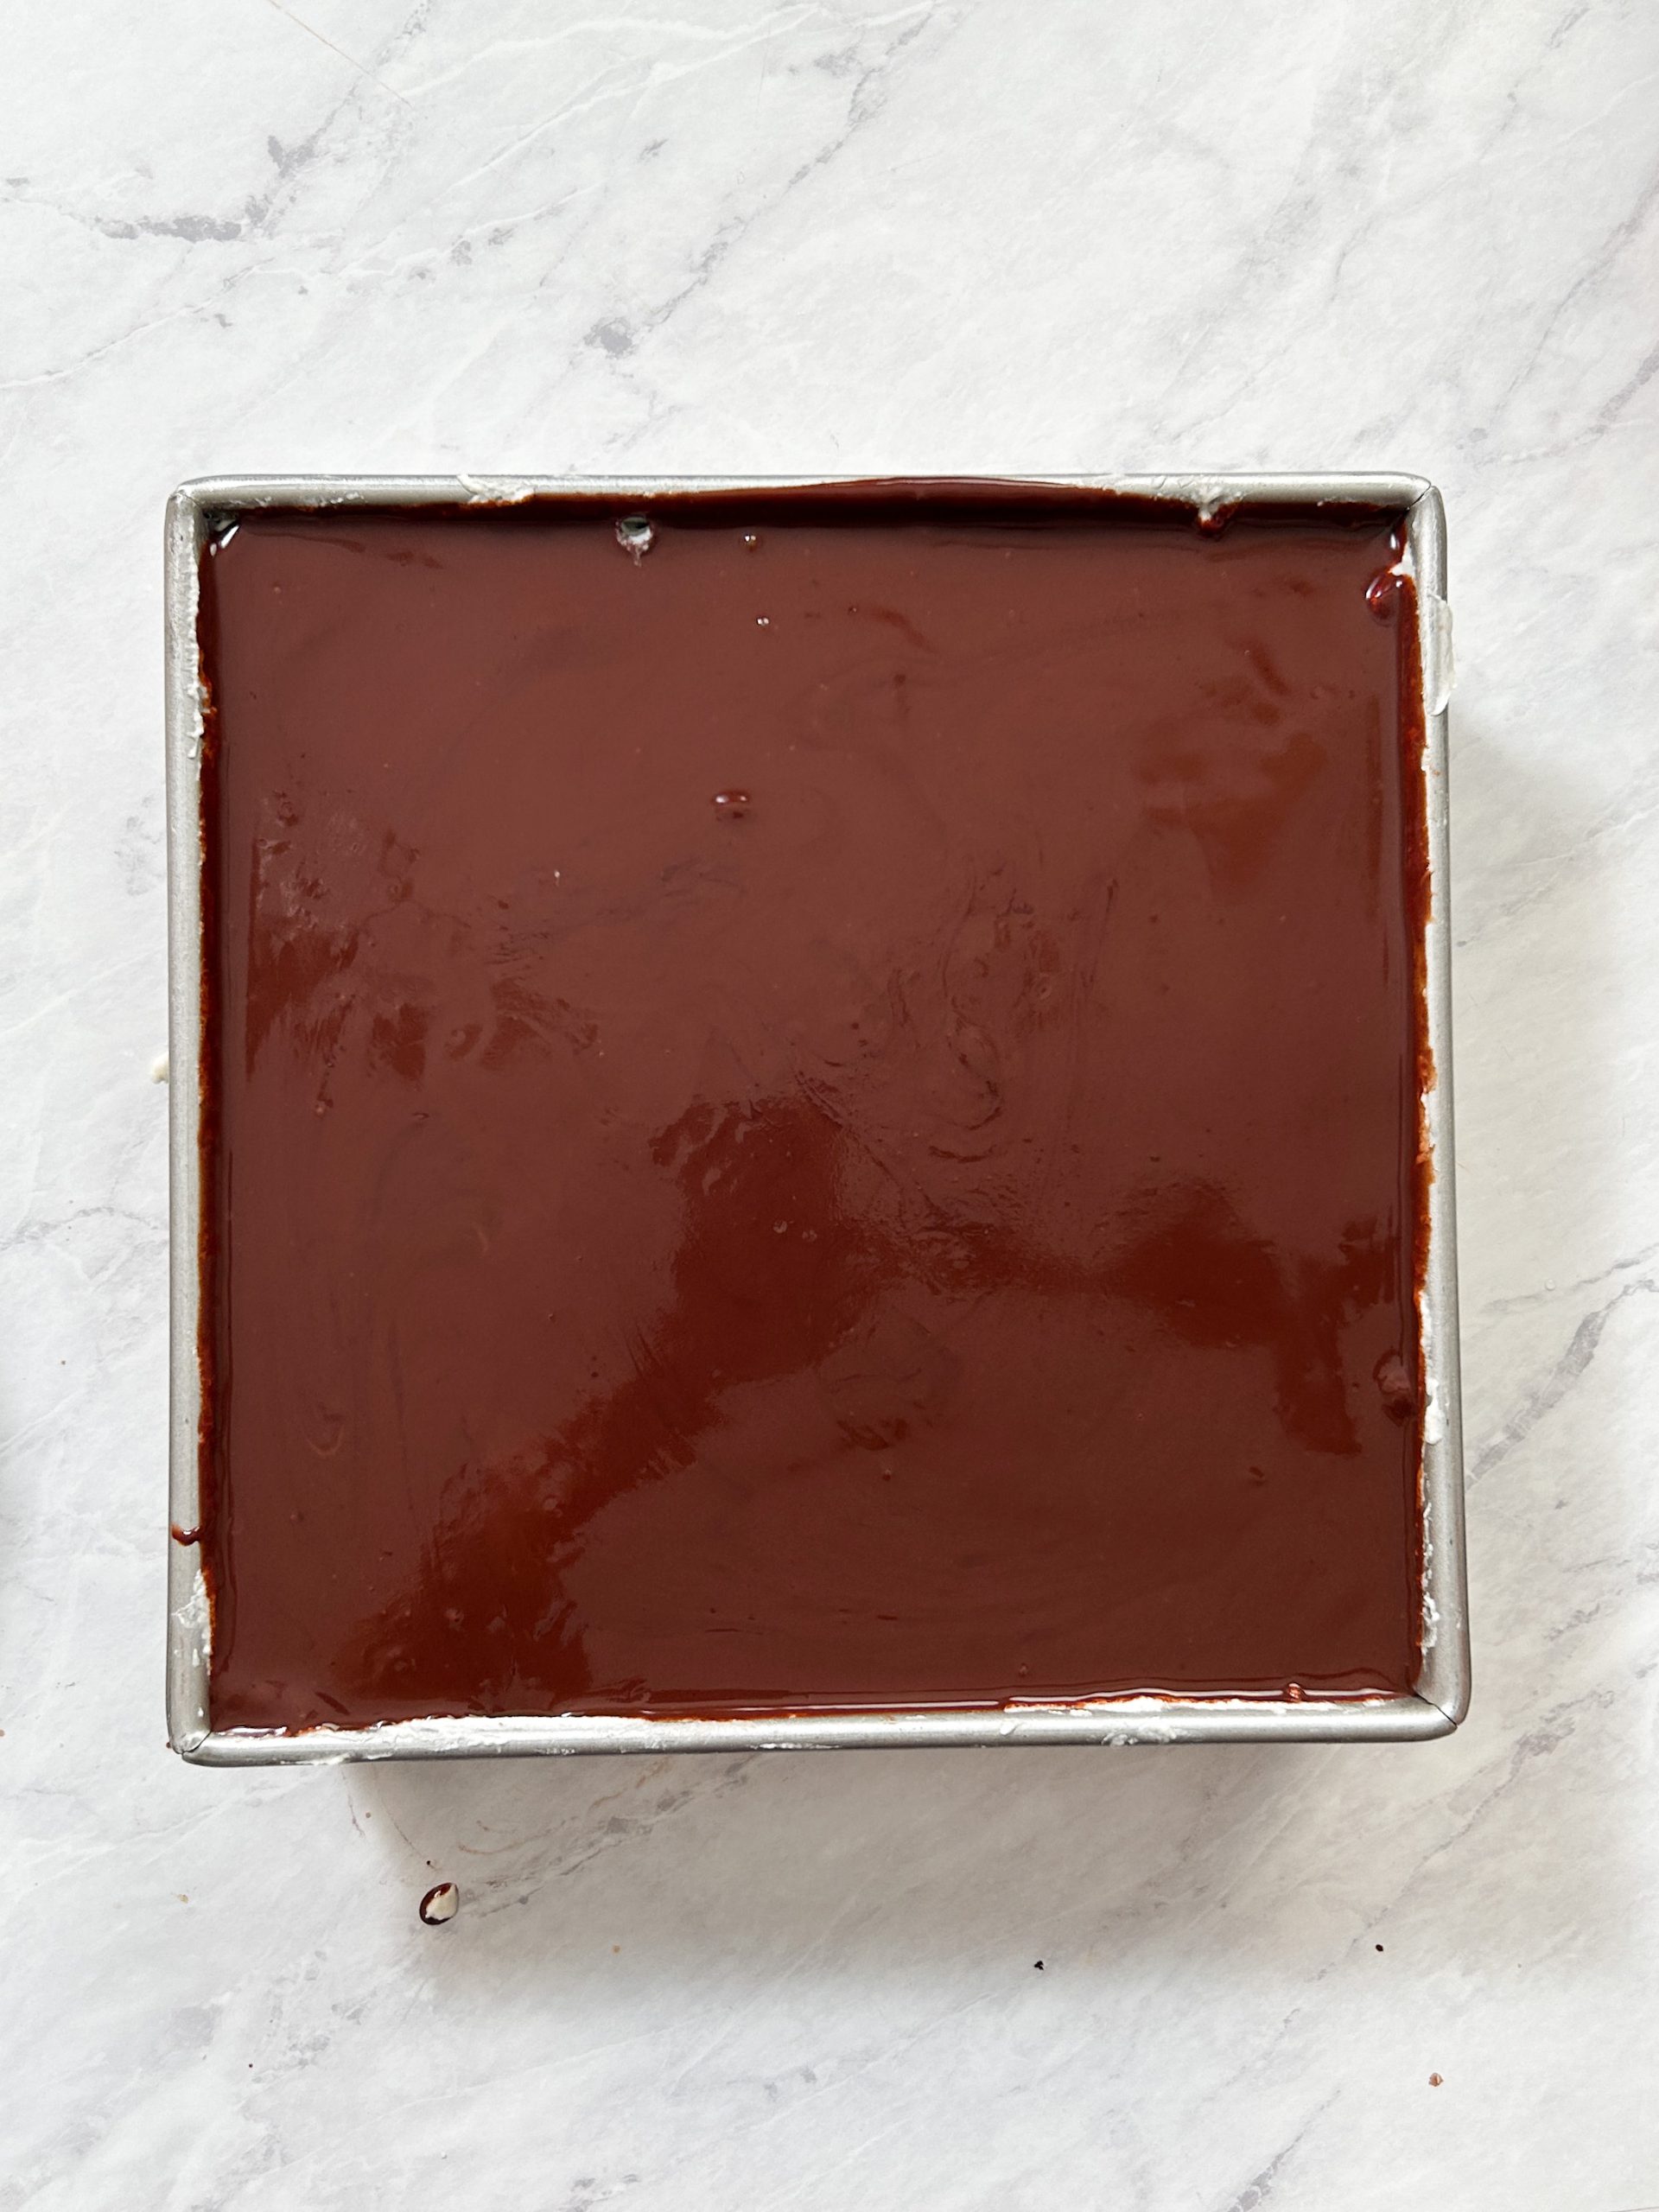 chocolate tiramisu in a pan topped with shiny chocolate ganache